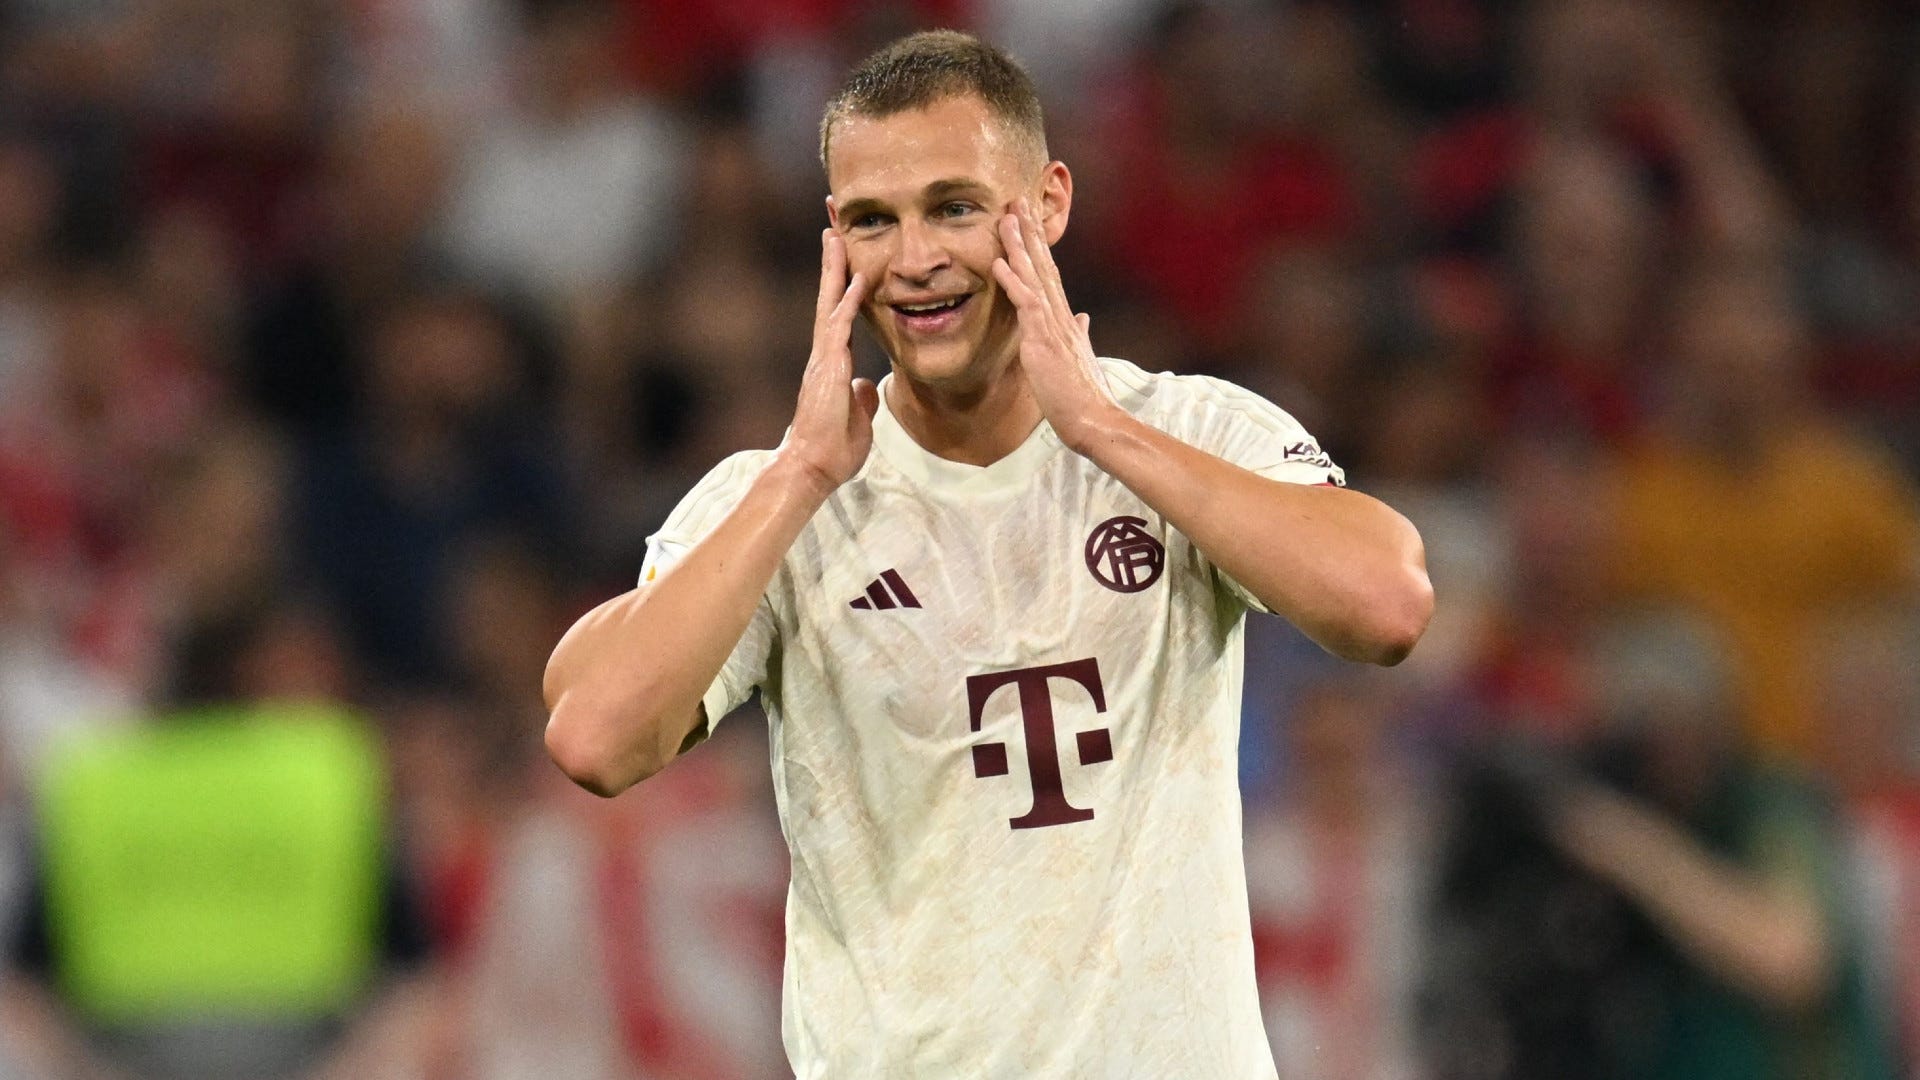 'It's just stupid' - Bayern Munich star Joshua Kimmich admits Thomas Tuchel's side are struggling against 'top teams' this season ahead of Champions League return